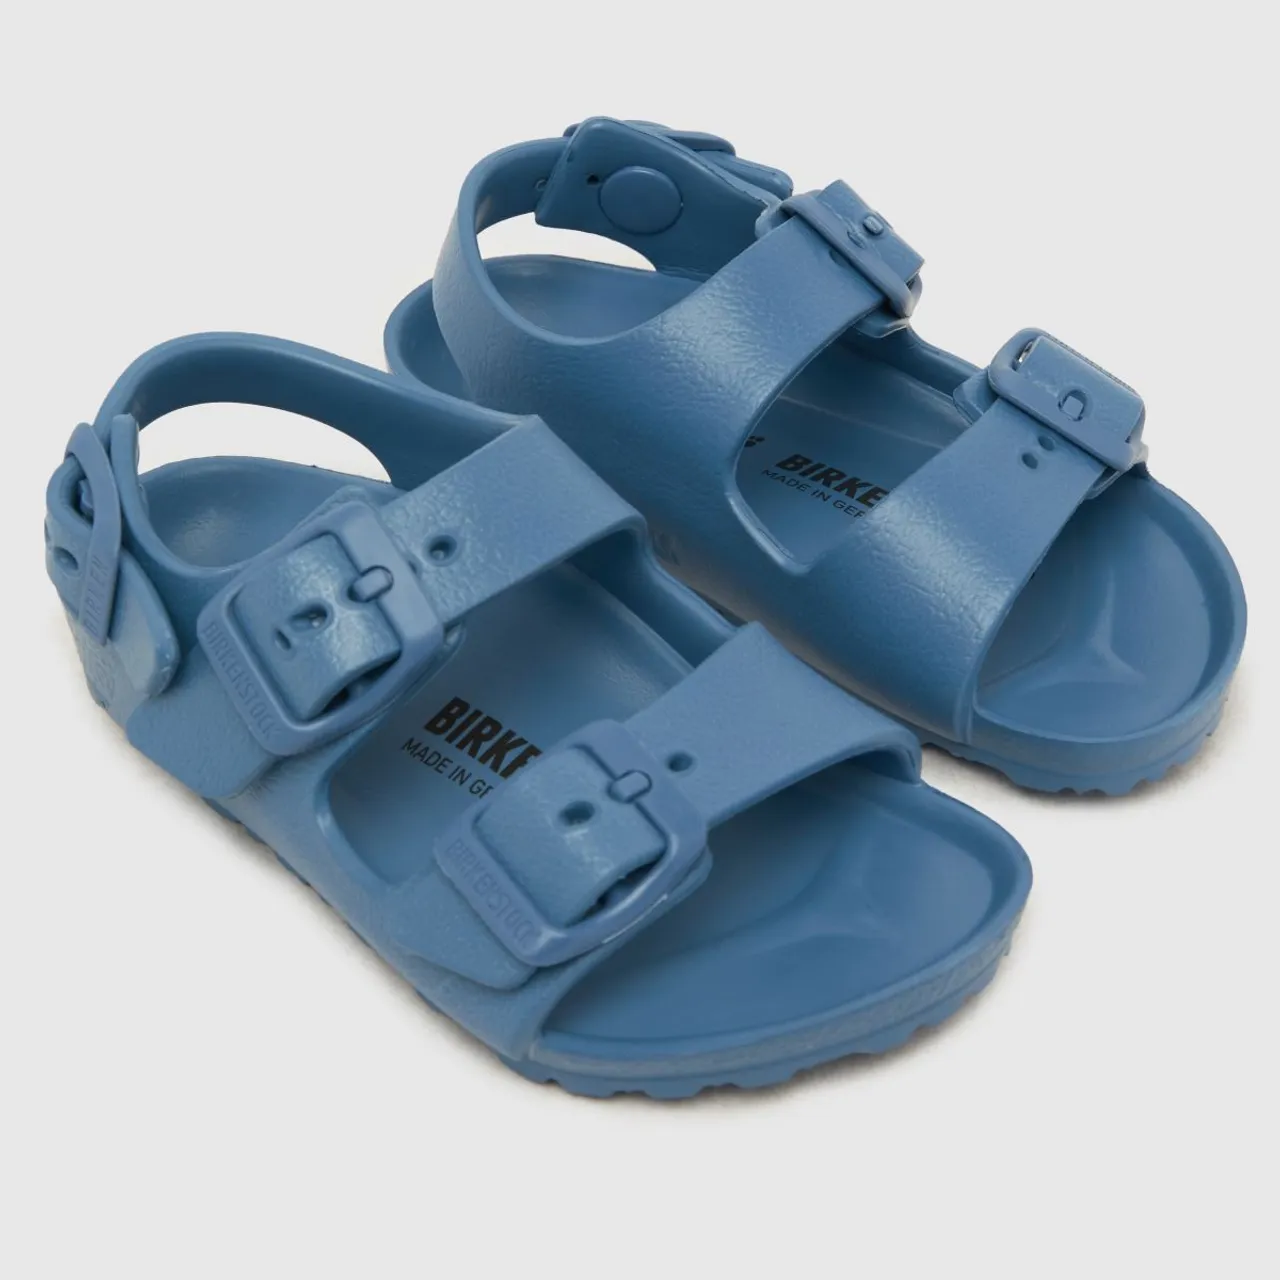 Birkenstock Blue Milano eva Boys Toddler Sandals